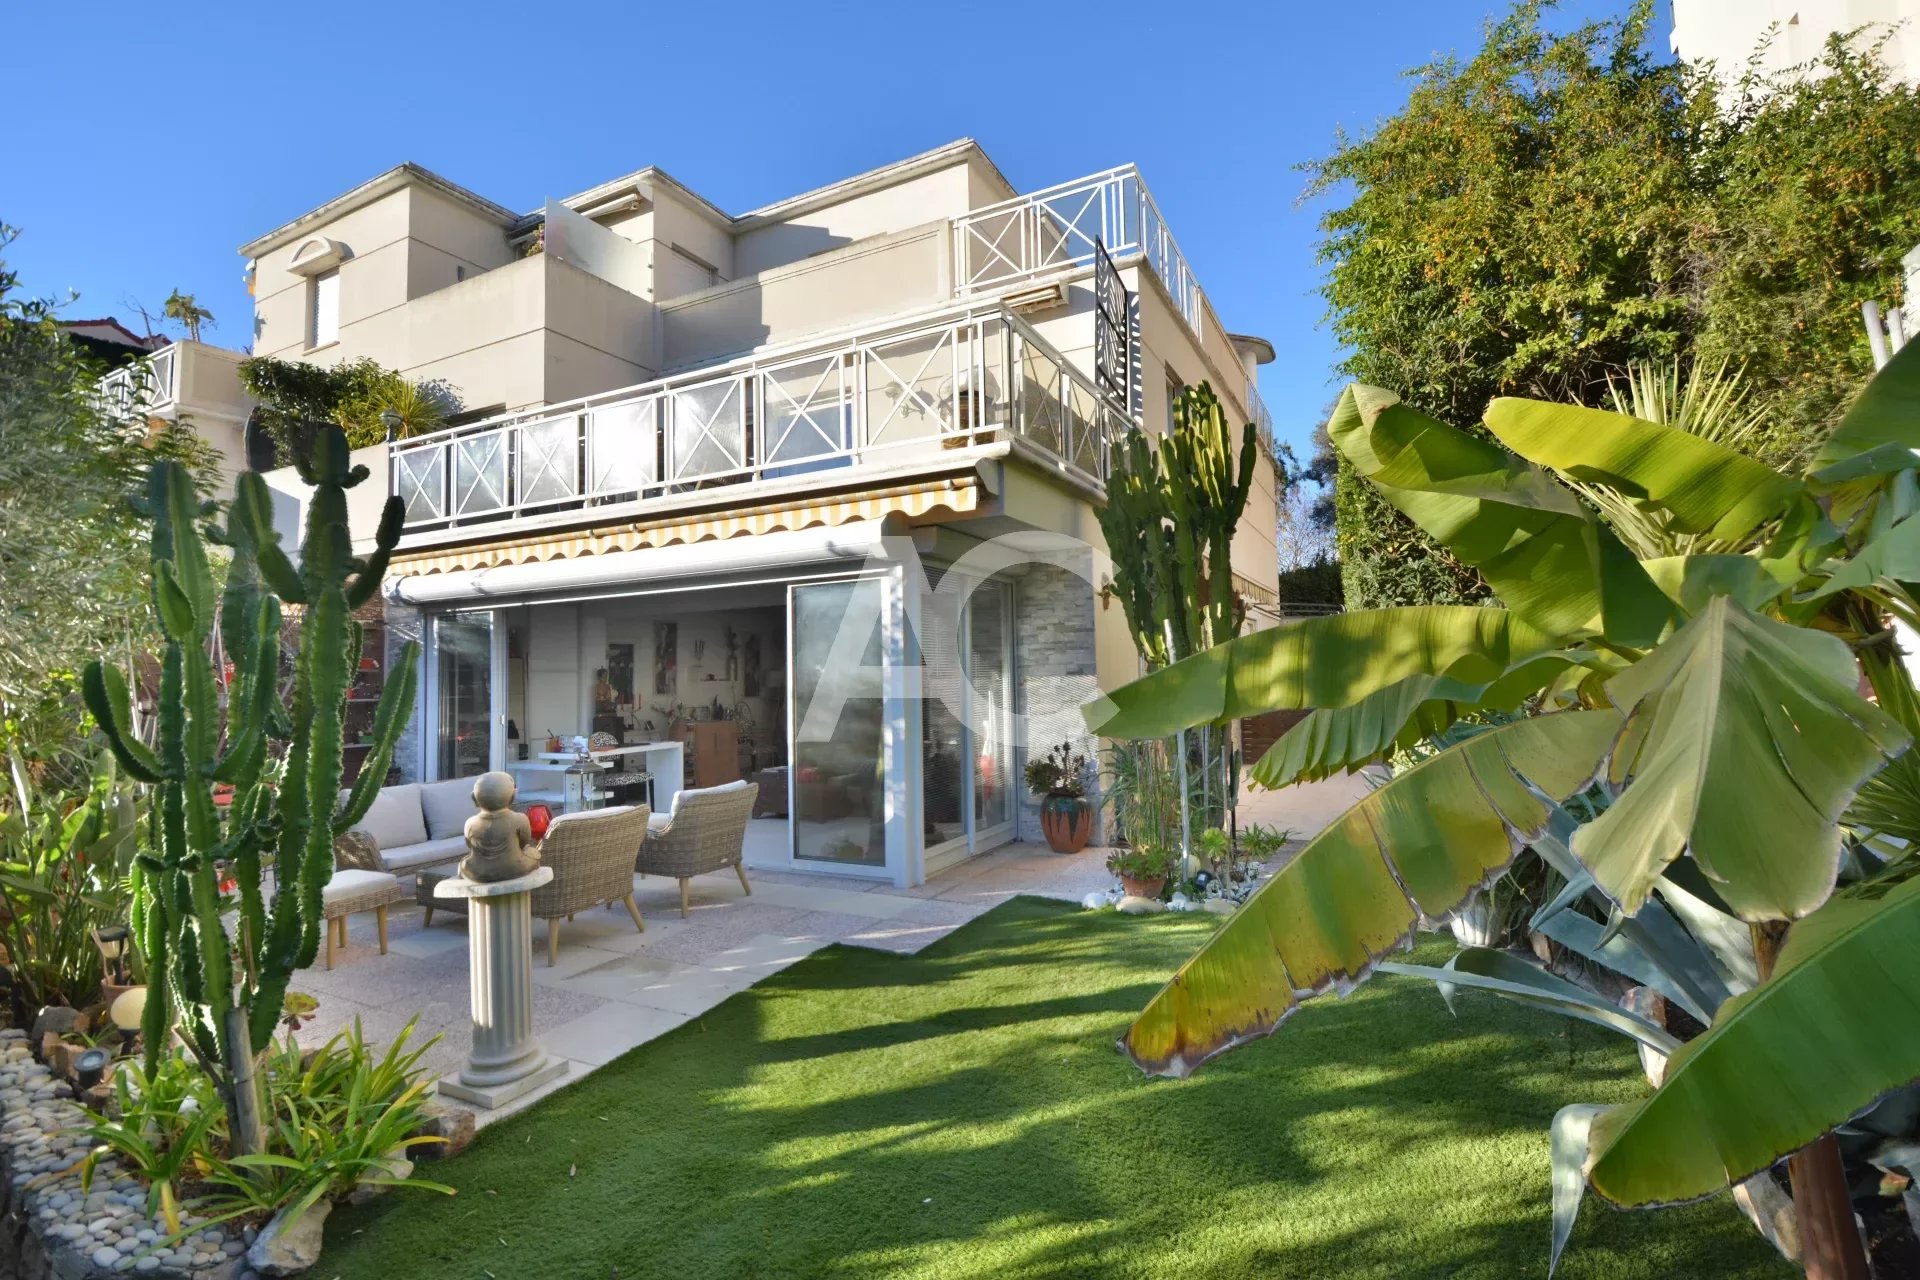 Superb garden level apartment at the start of Cap d'Antibes